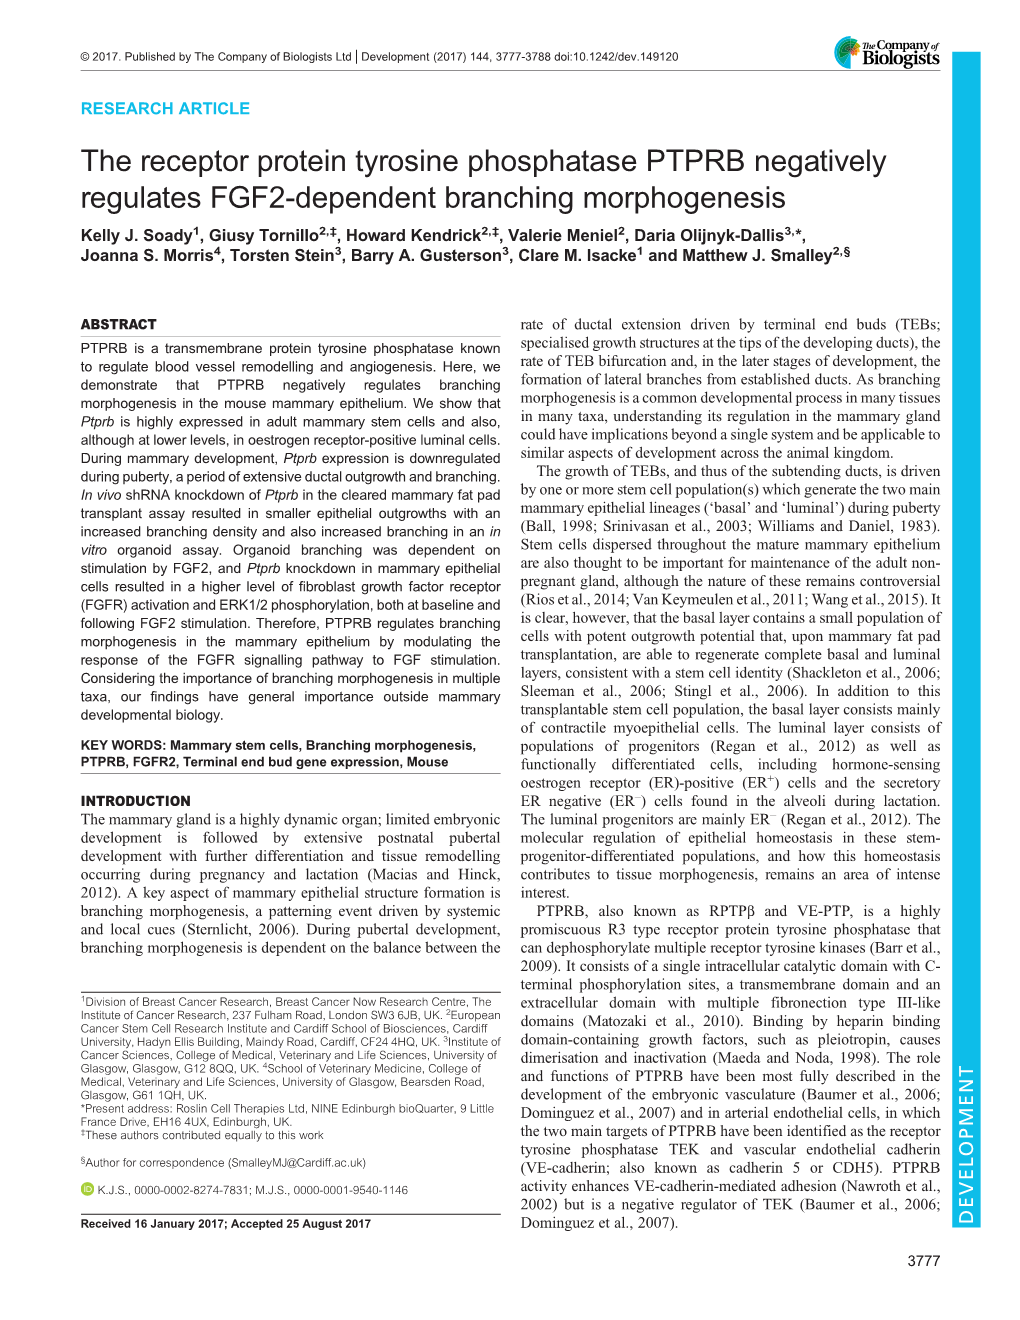 The Receptor Protein Tyrosine Phosphatase PTPRB Negatively Regulates FGF2-Dependent Branching Morphogenesis Kelly J